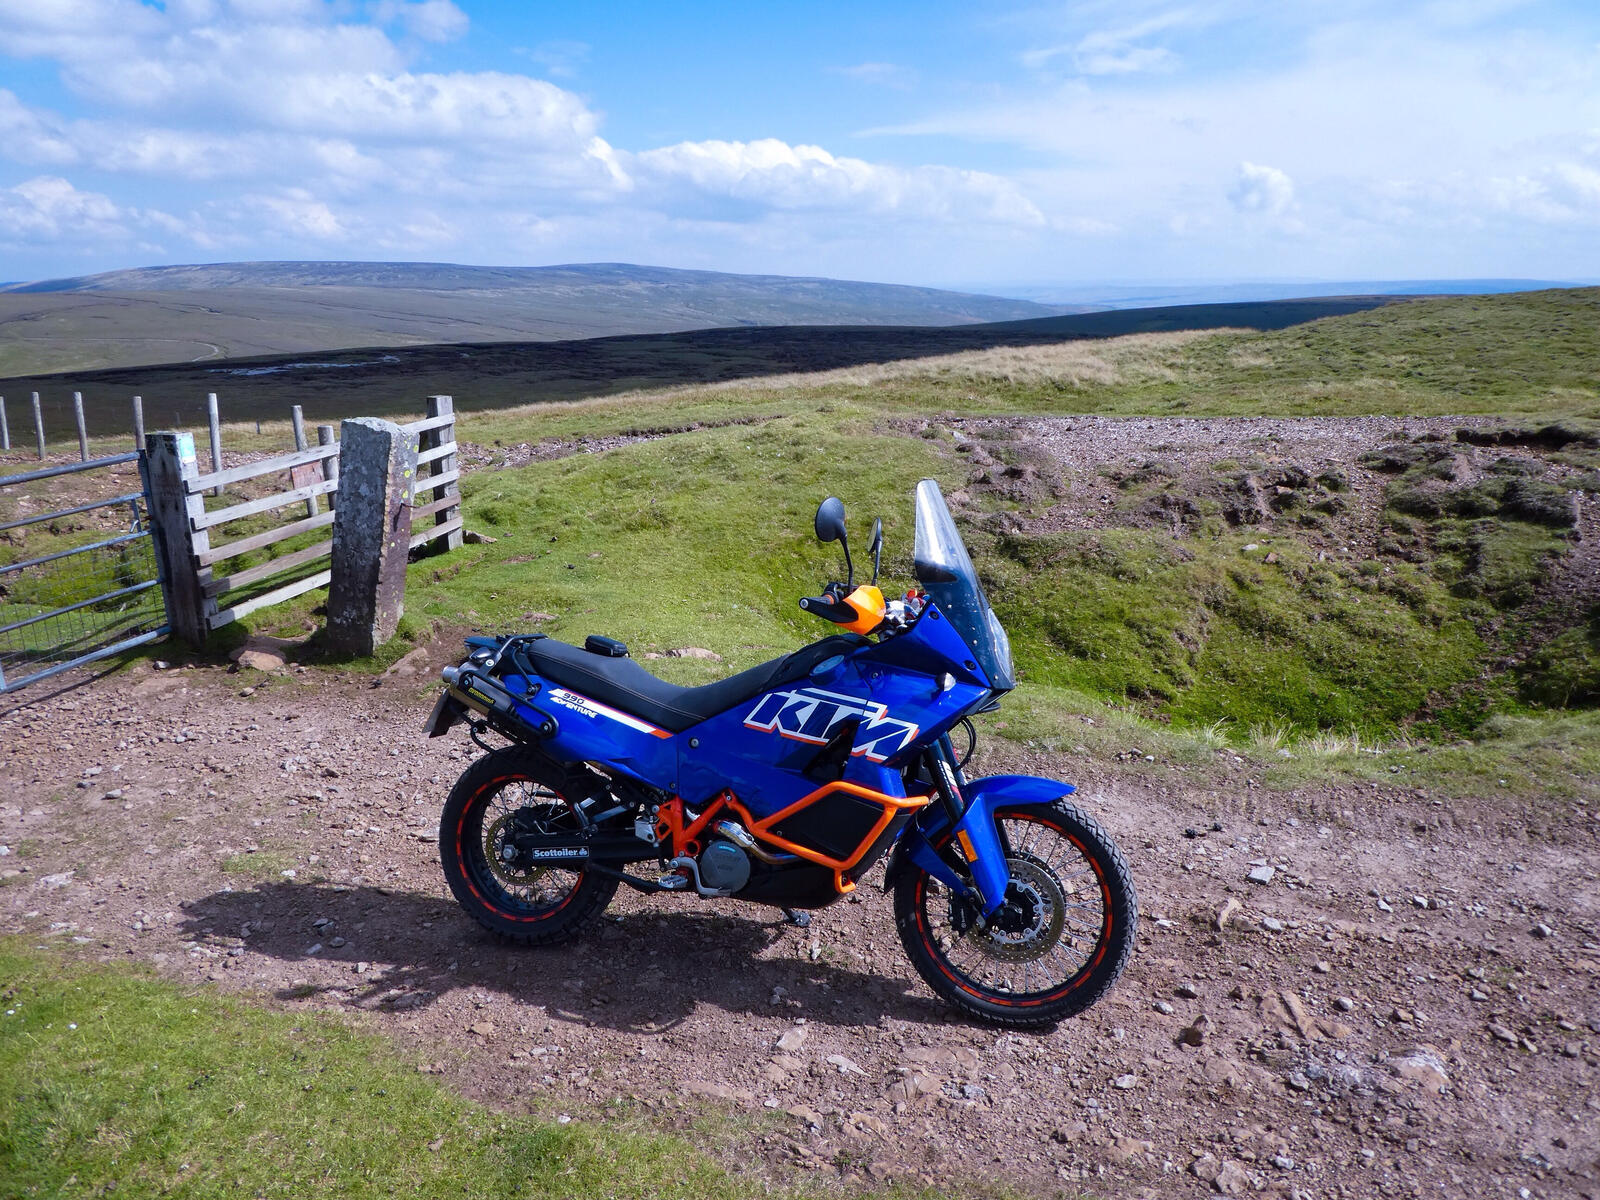 Бесплатное фото Синий мотоцикл возле деревянного забора на ферме